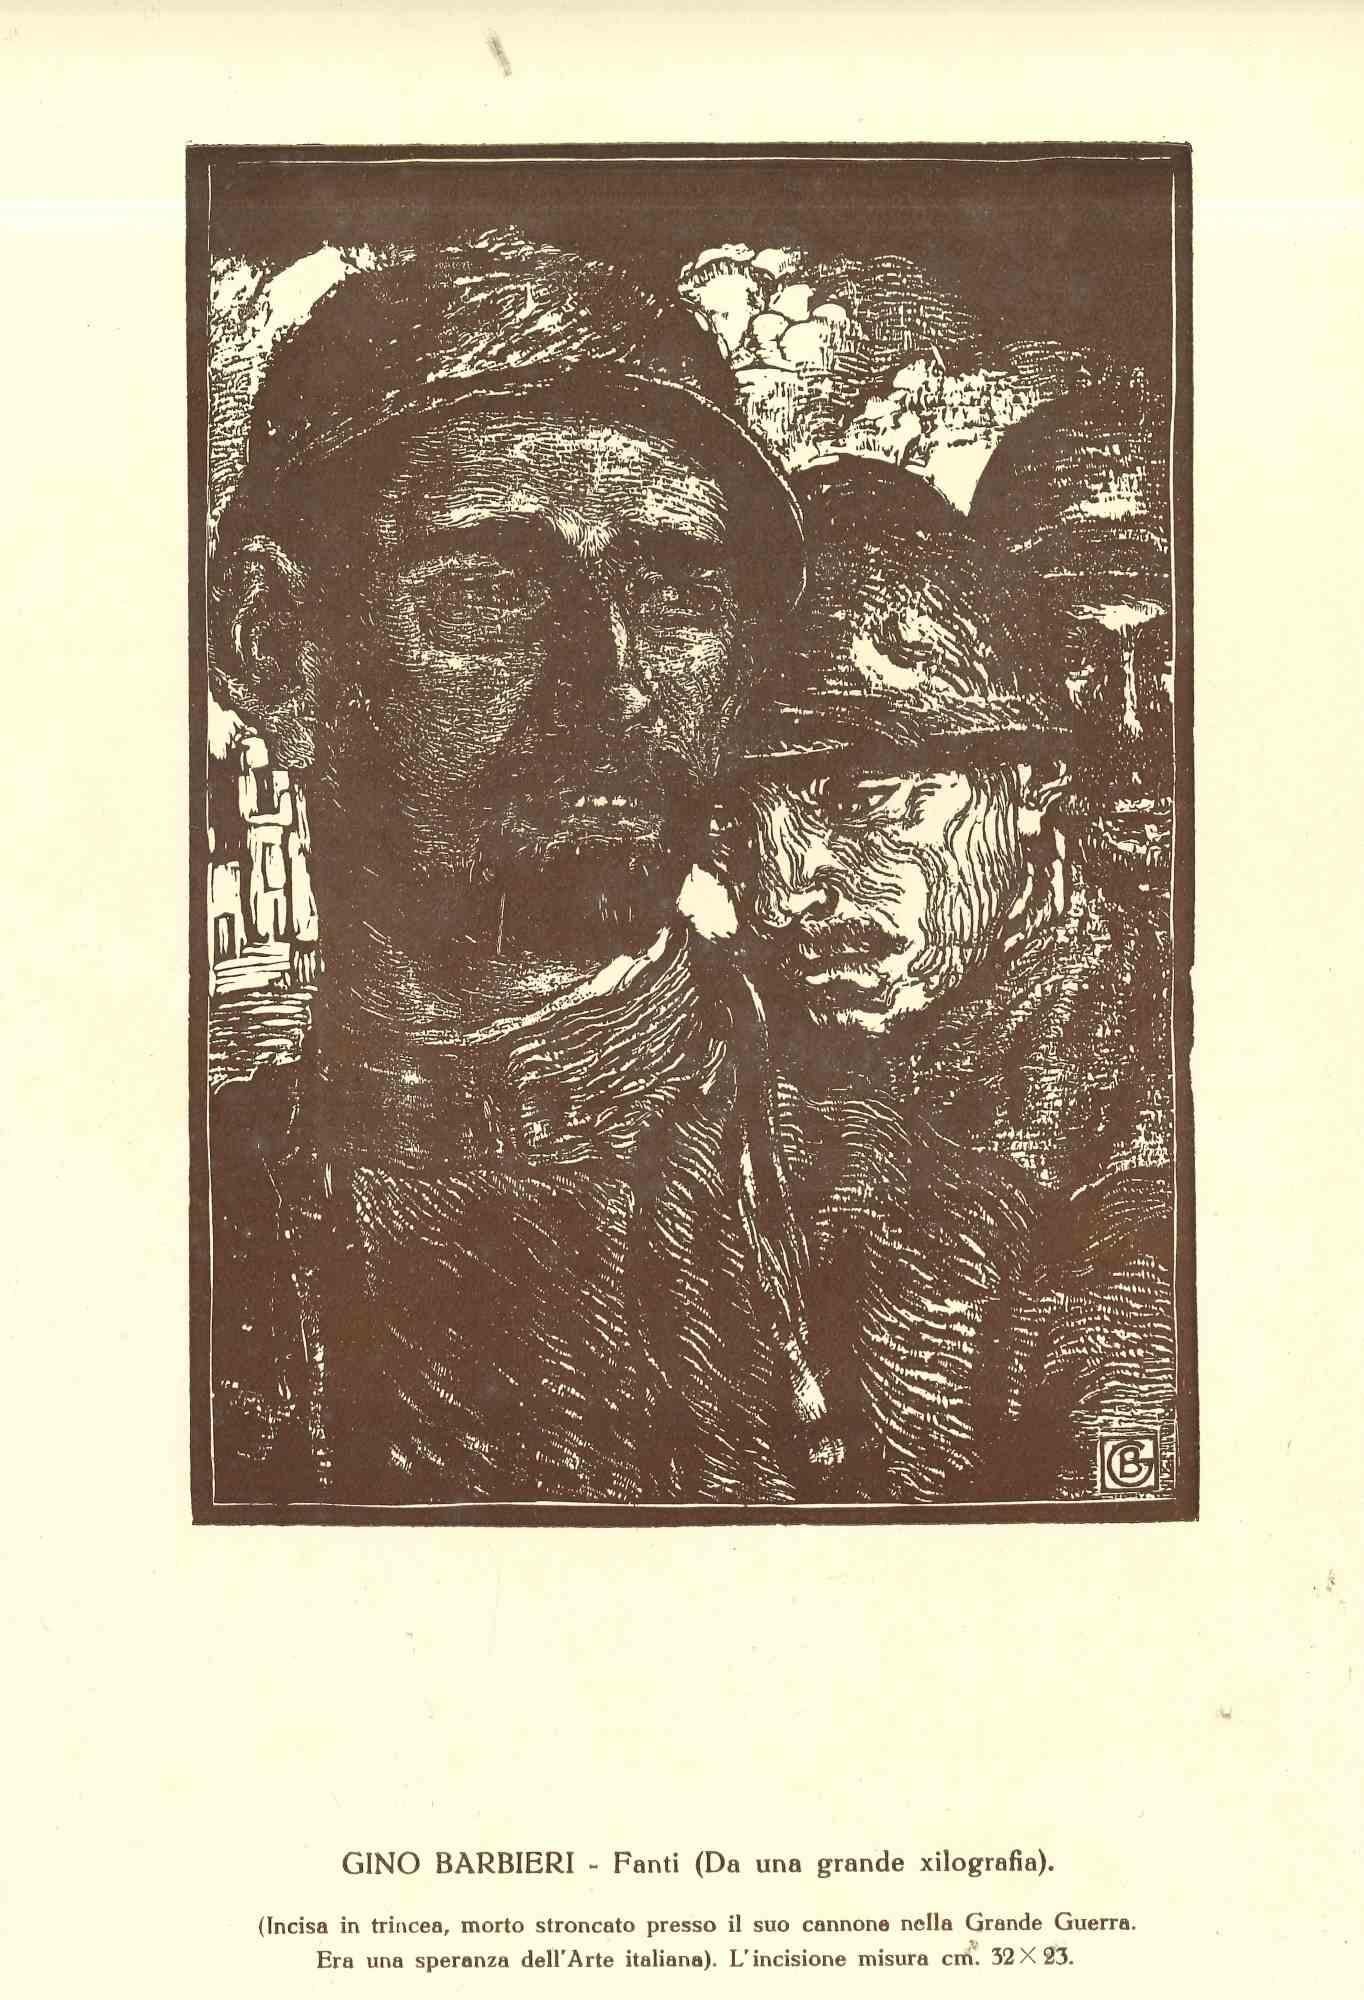 Unknown Figurative Print - Infantryman - Original Woodcut by Gino Barbieri - Early 20th Century